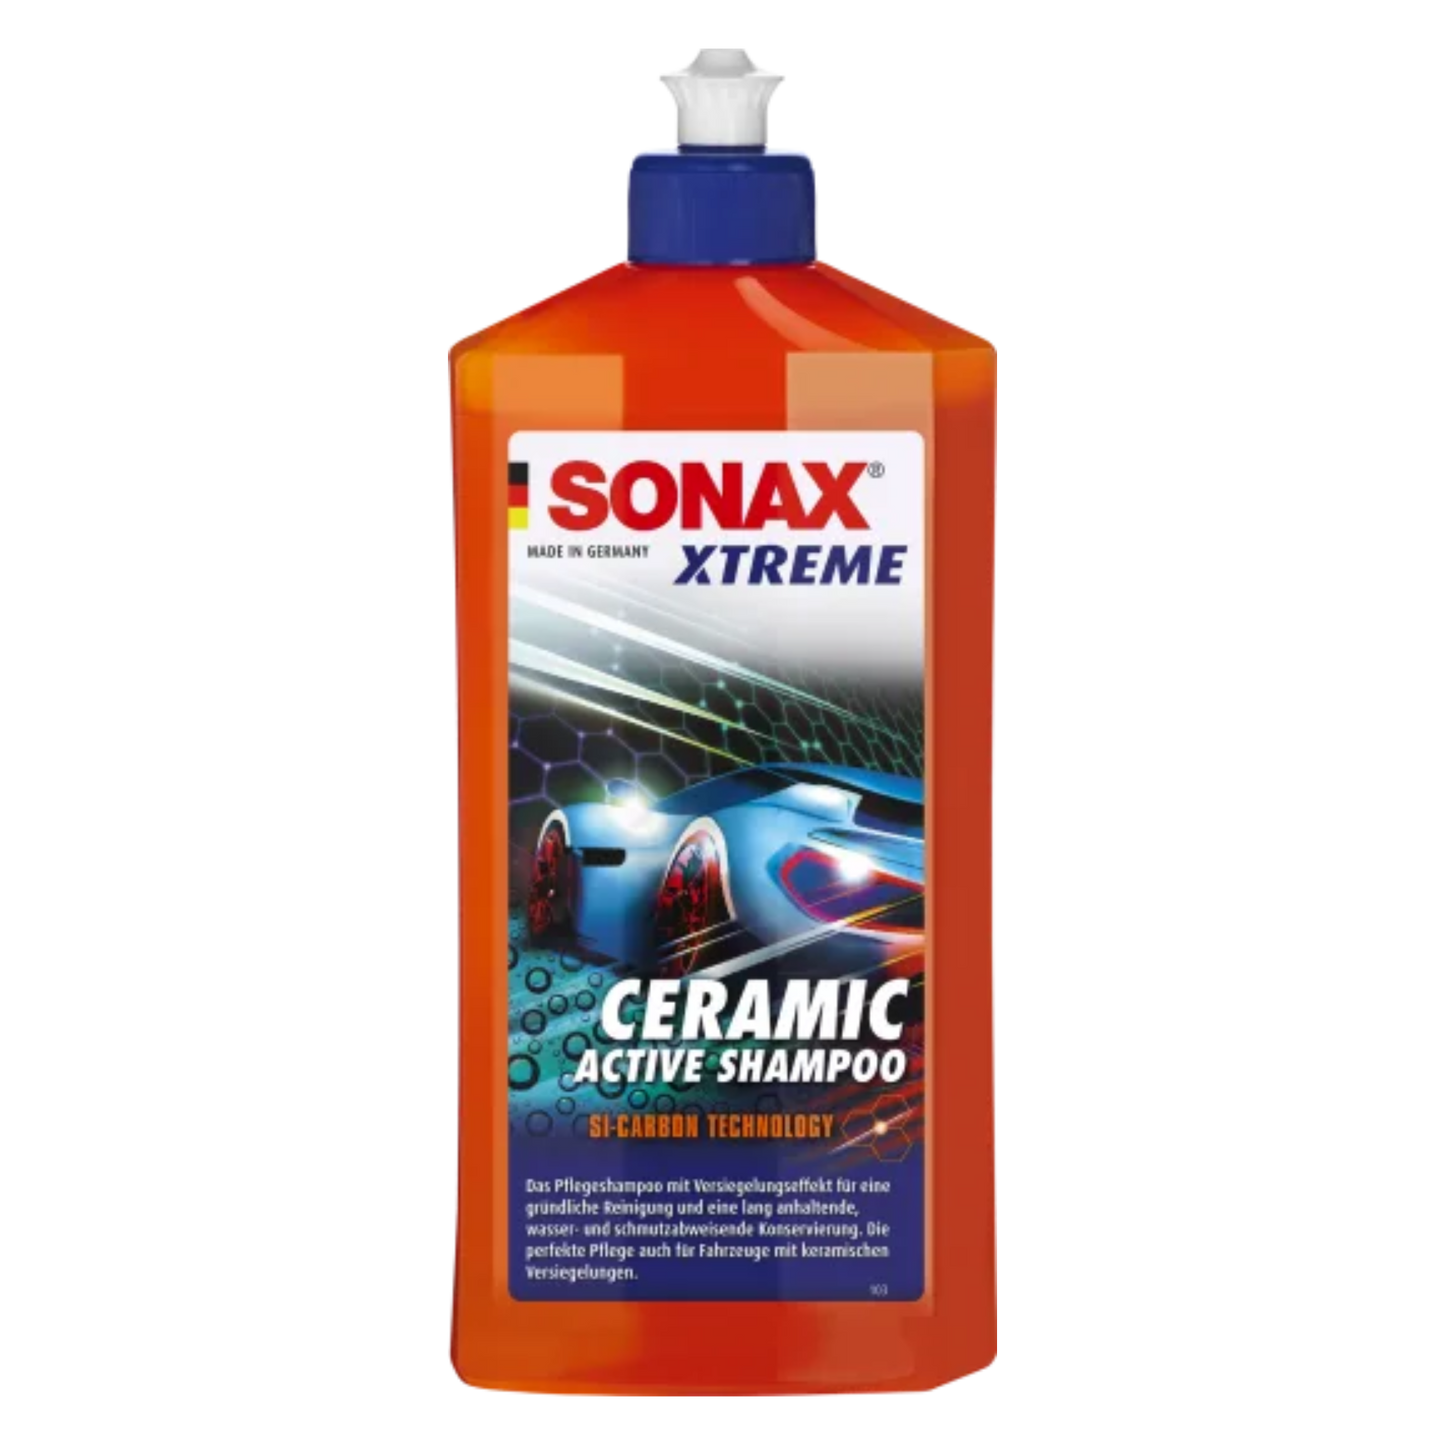 SONAX XTREME Ceramic Active Shampoo - 500ml